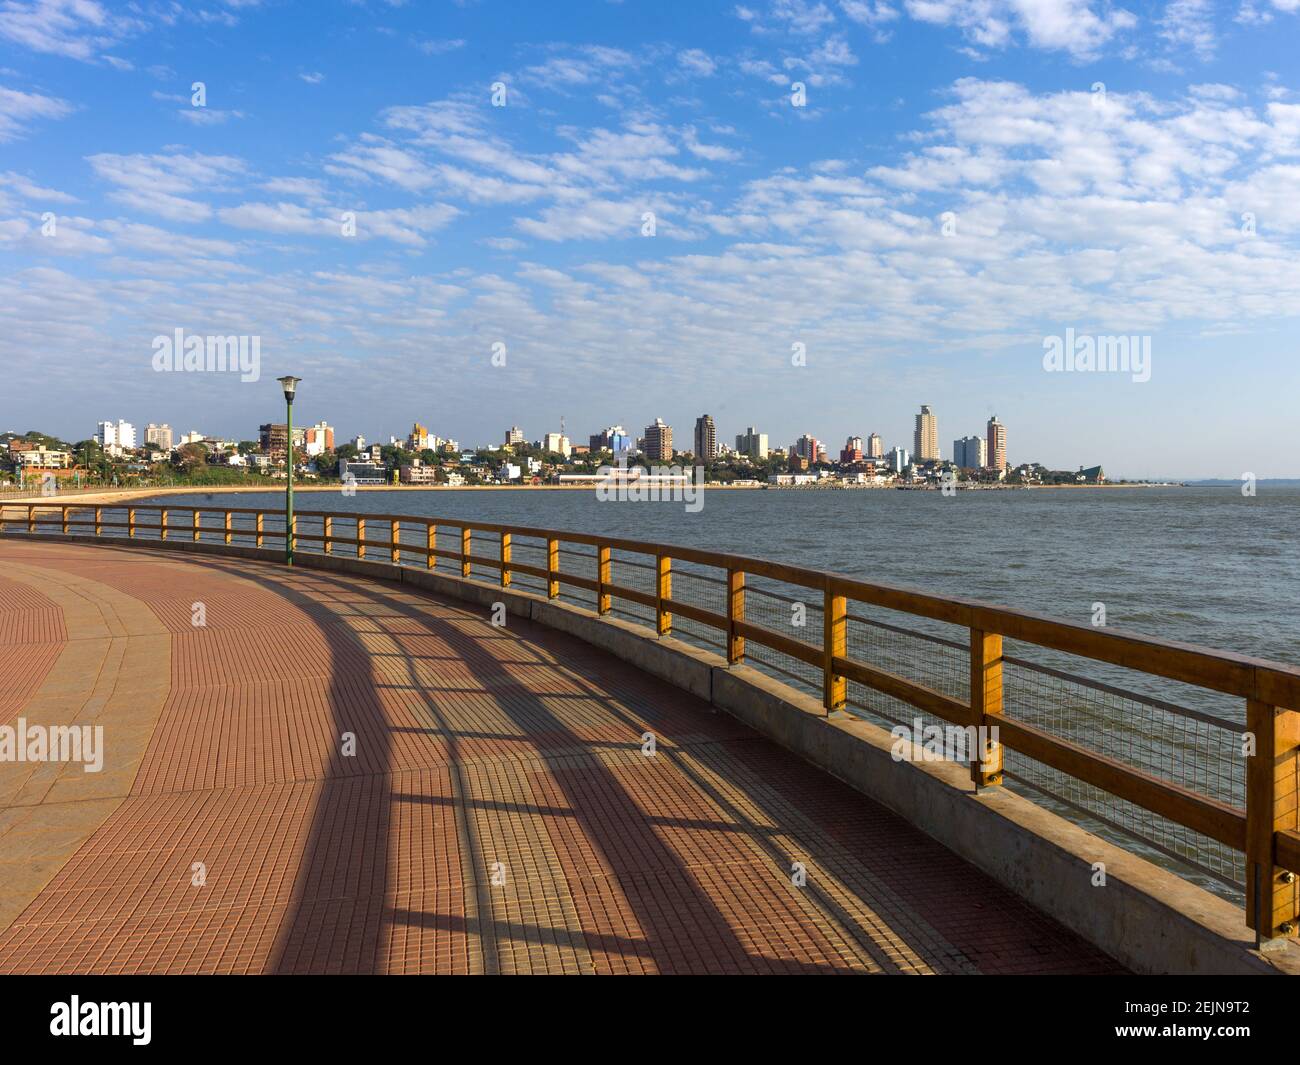 Posadas riverside walk. Panoramic skyline of the city Posadas, Argentina, across the river Parana Stock Photo